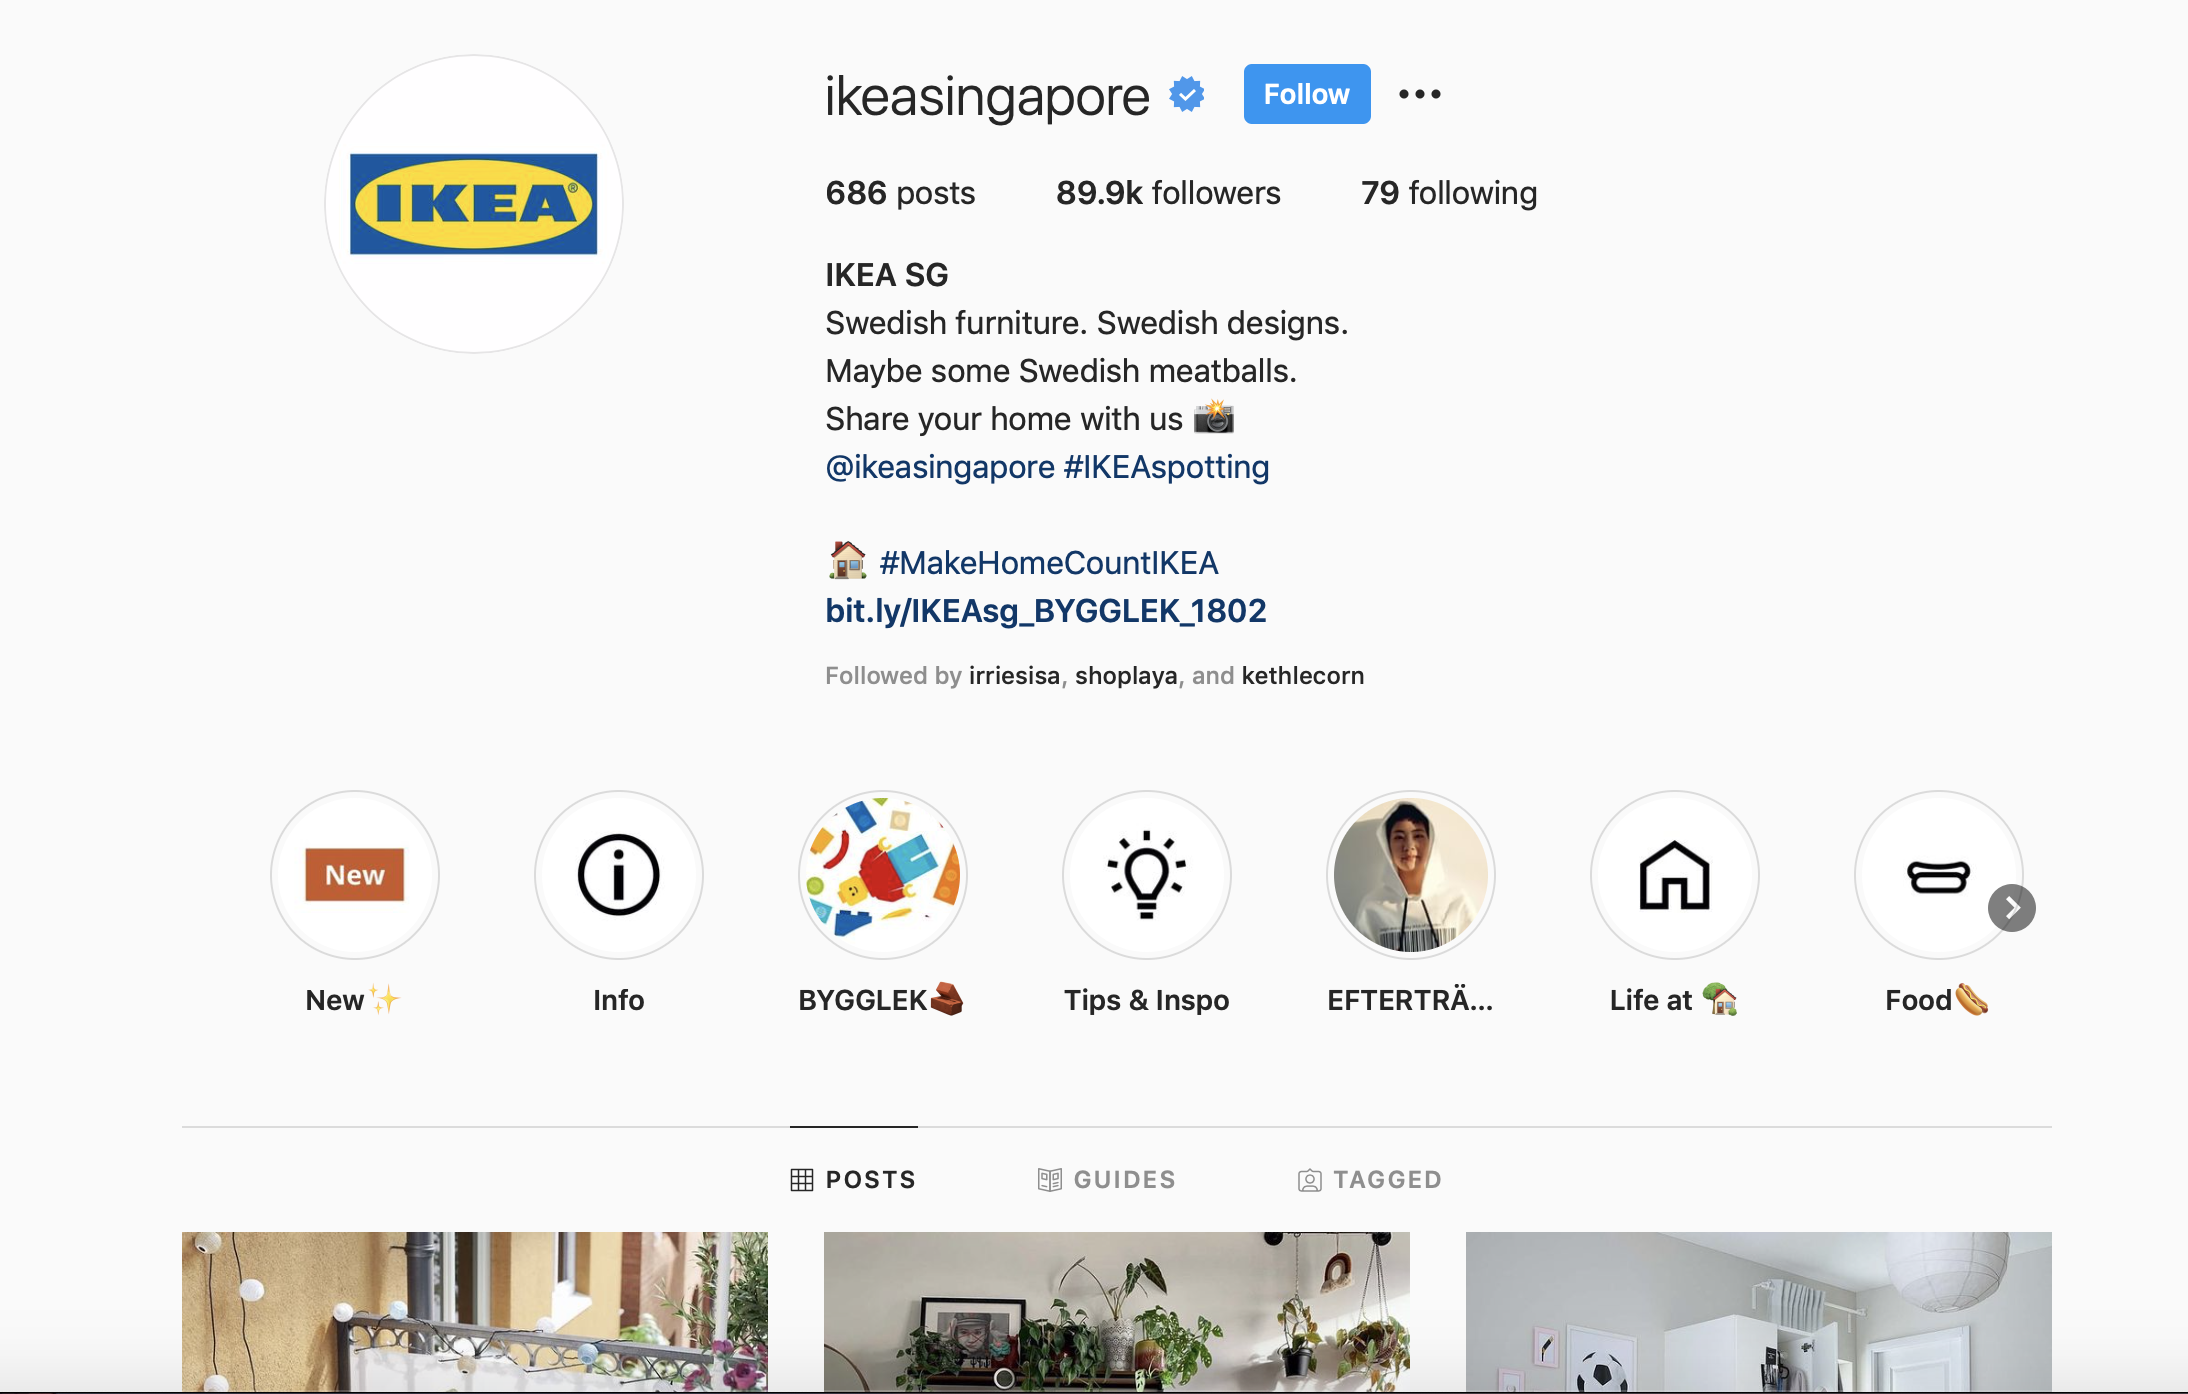 Ikea Singapore Instagram